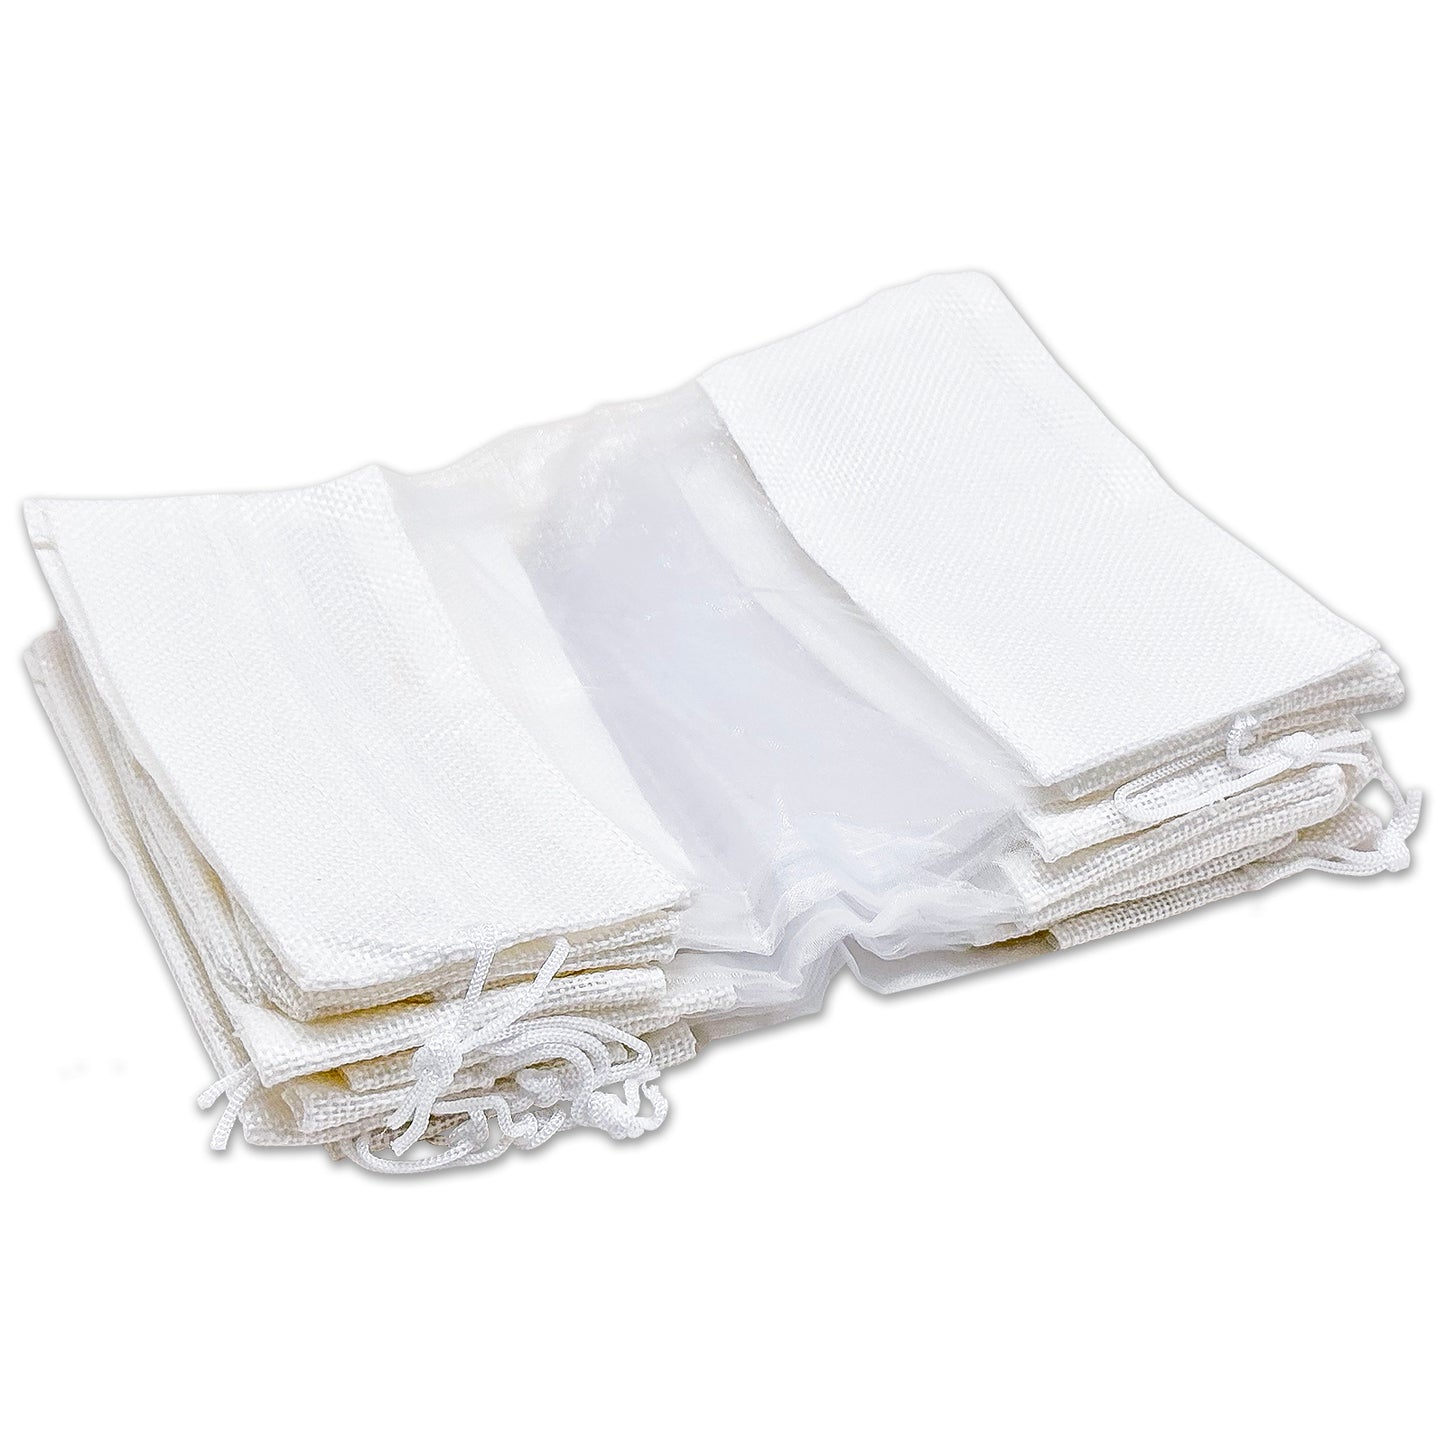 7 1/2" x 11 1/2" White Linen Burlap and Sheer Organza Gift Bag